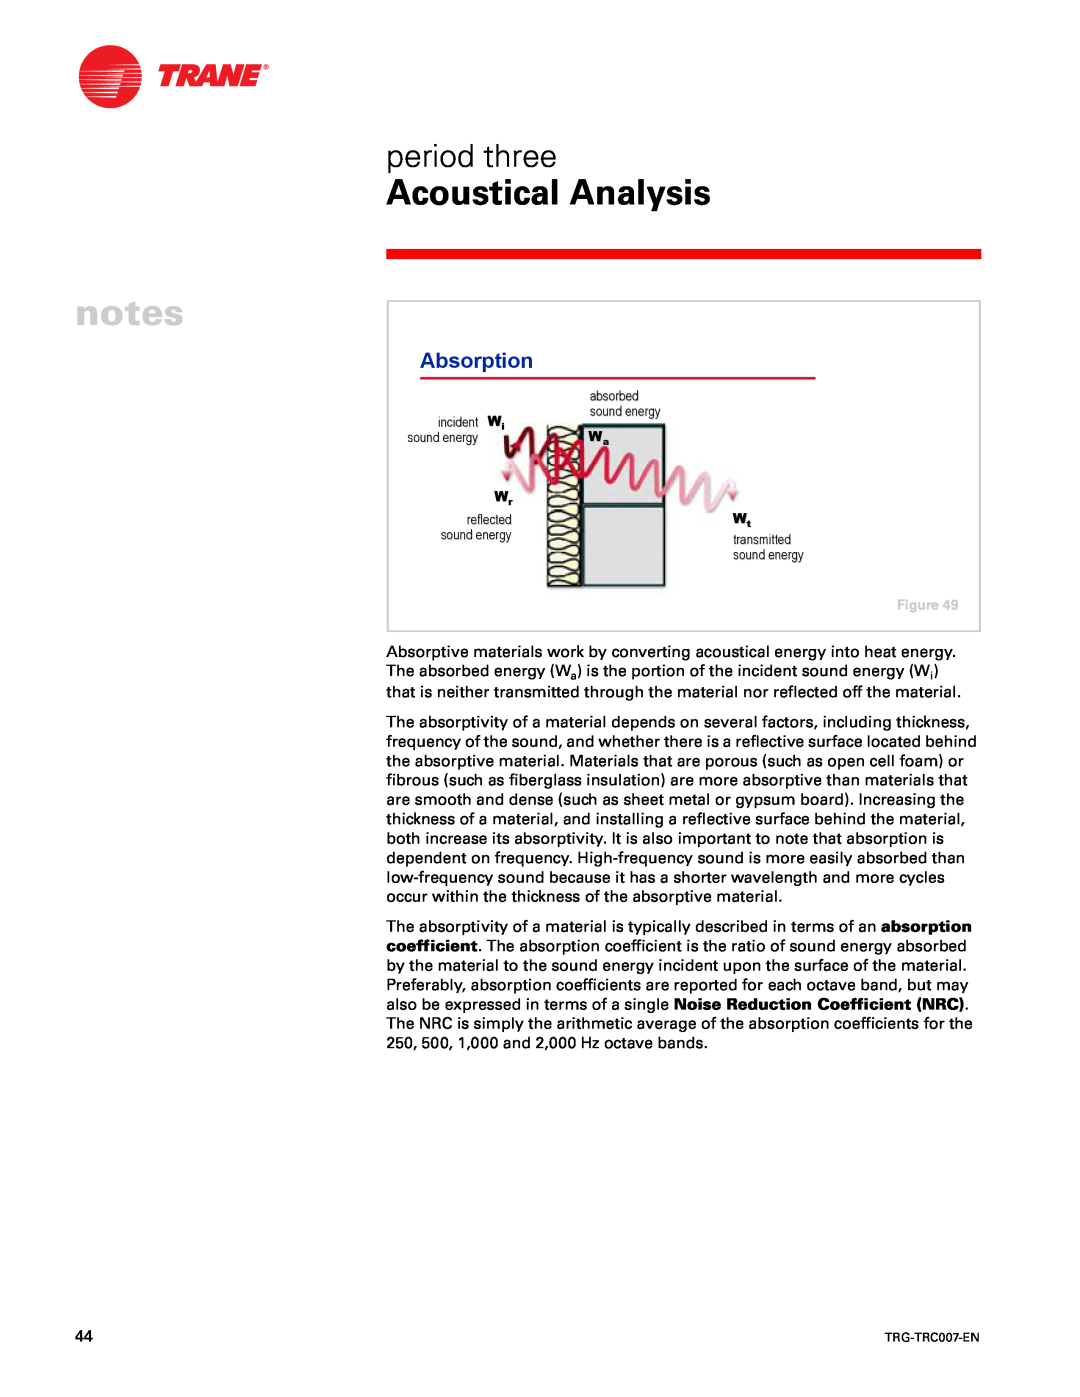 Trane TRG-TRC007-EN manual Absorption, Acoustical Analysis, period three 